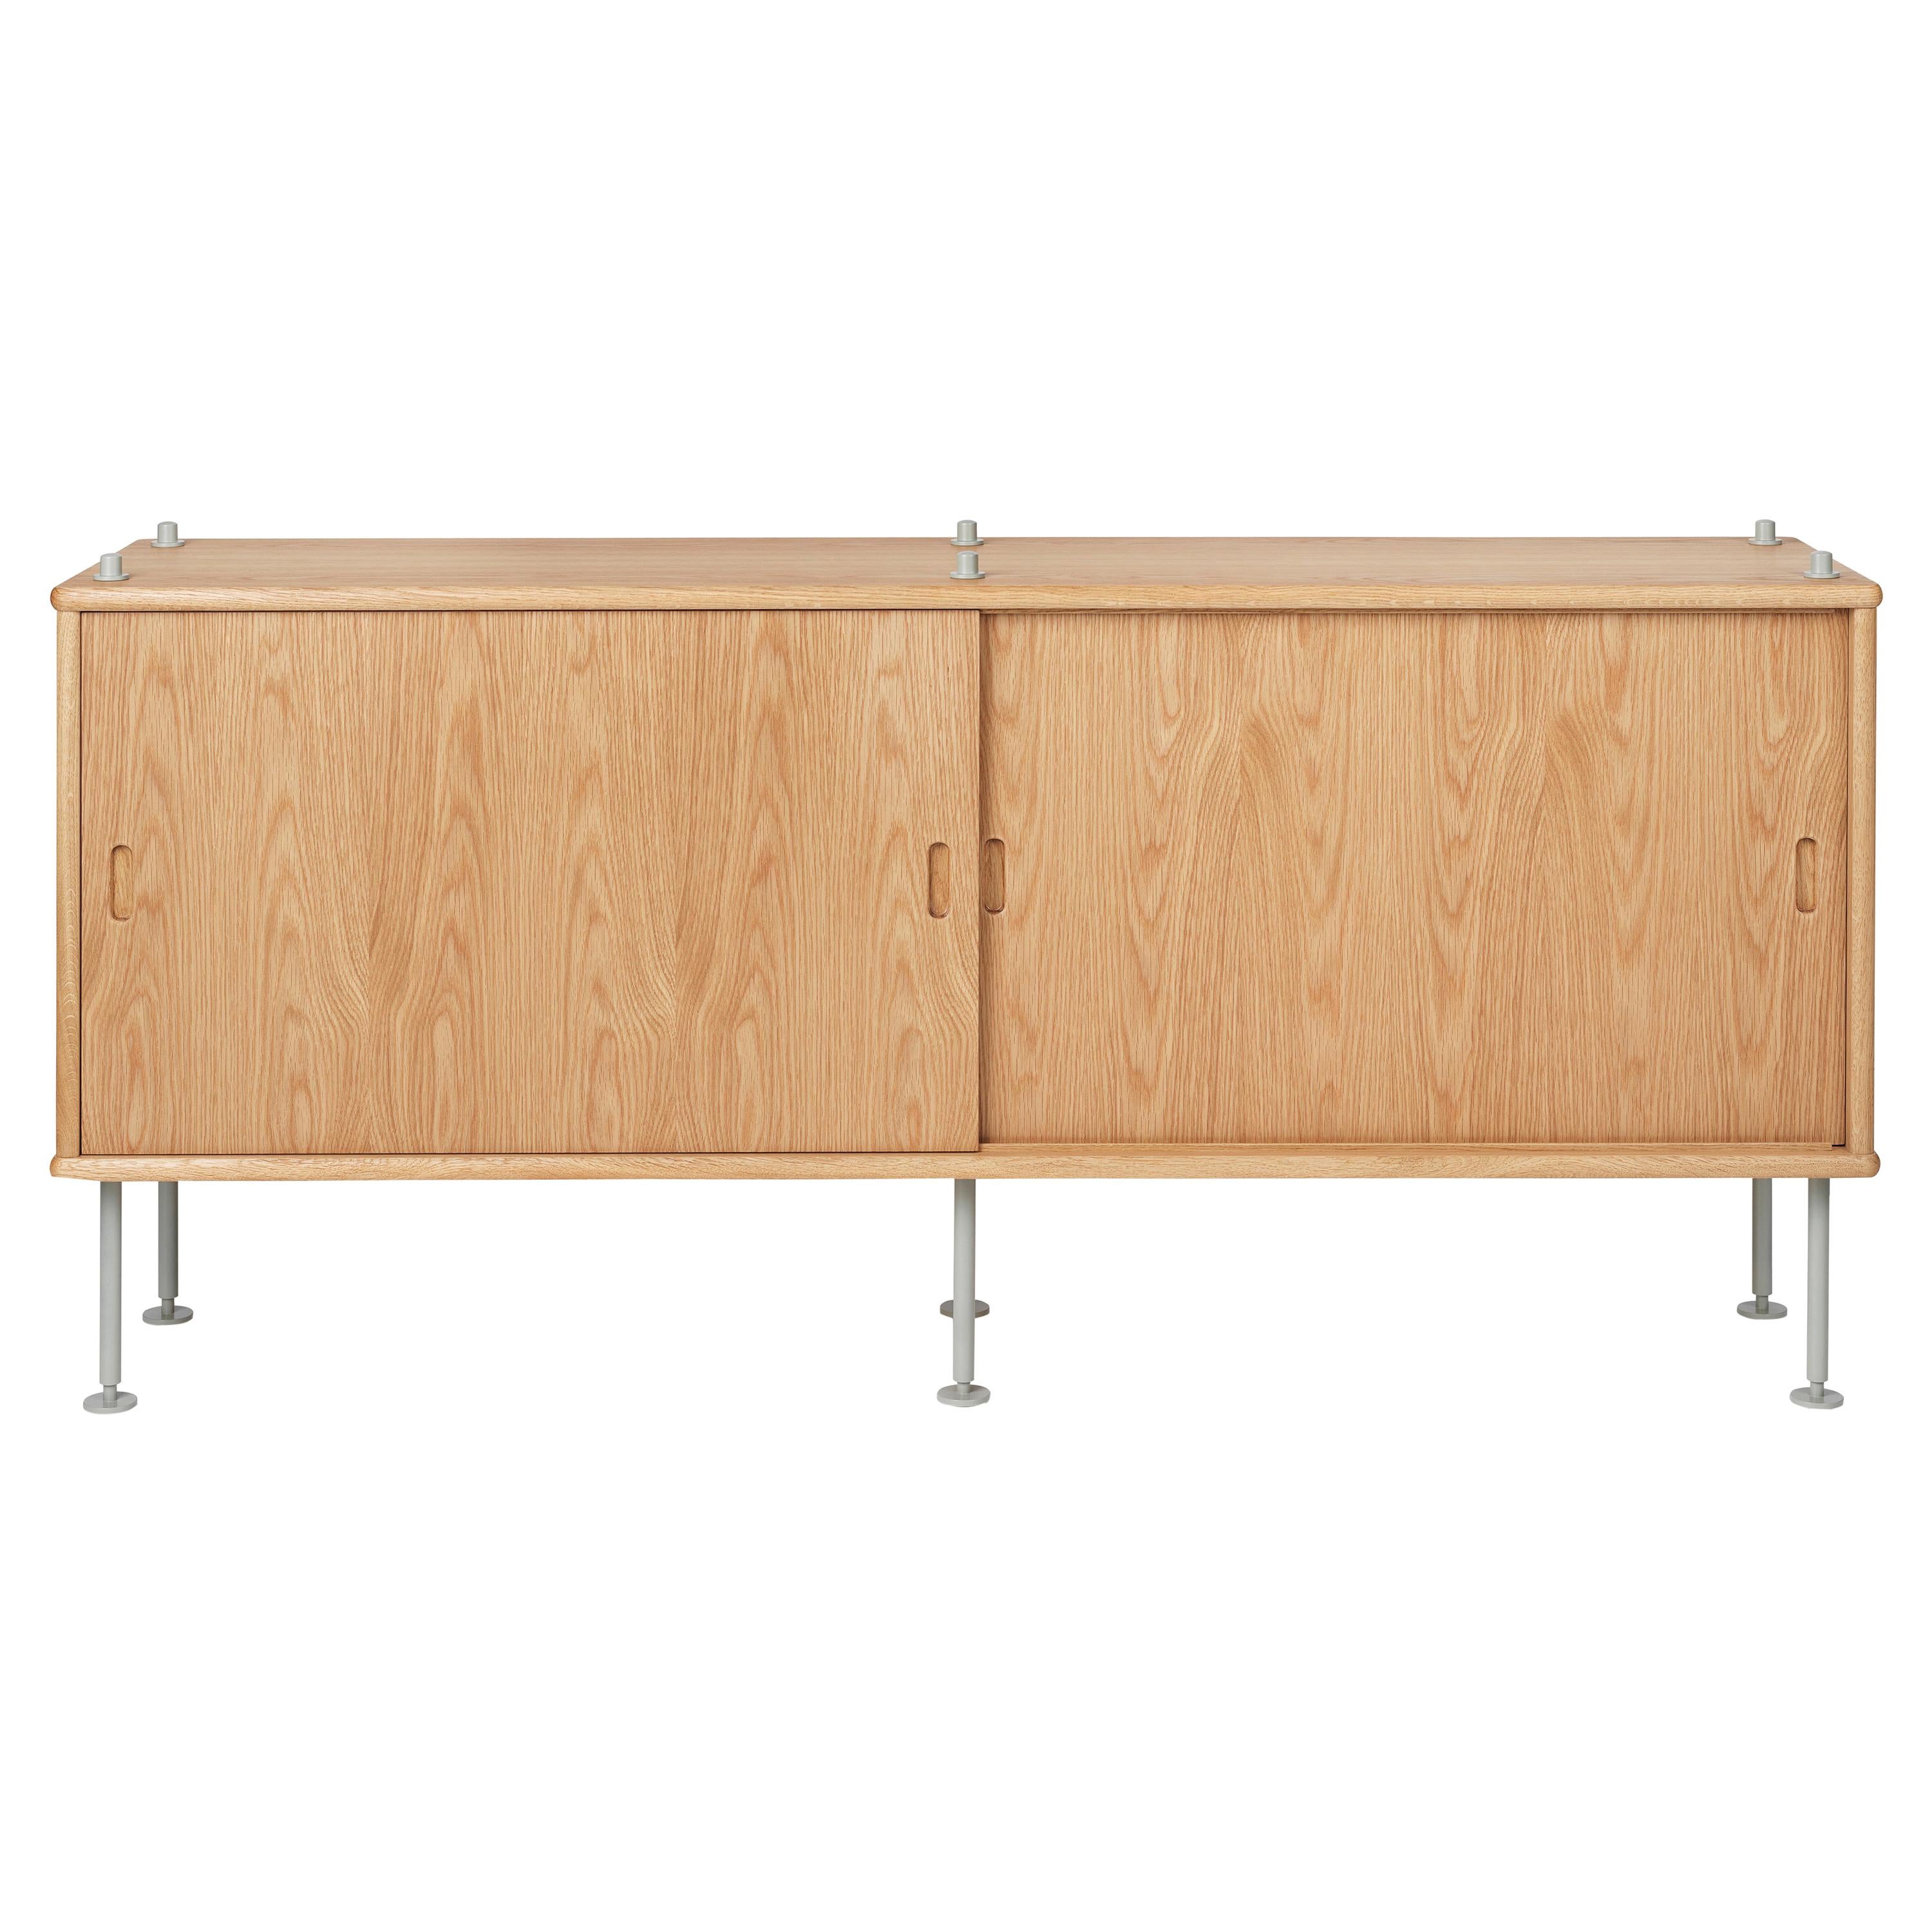 Carl Hansen BM0253-1 Shelf and Cabinet in Walnut with Steel Legs 